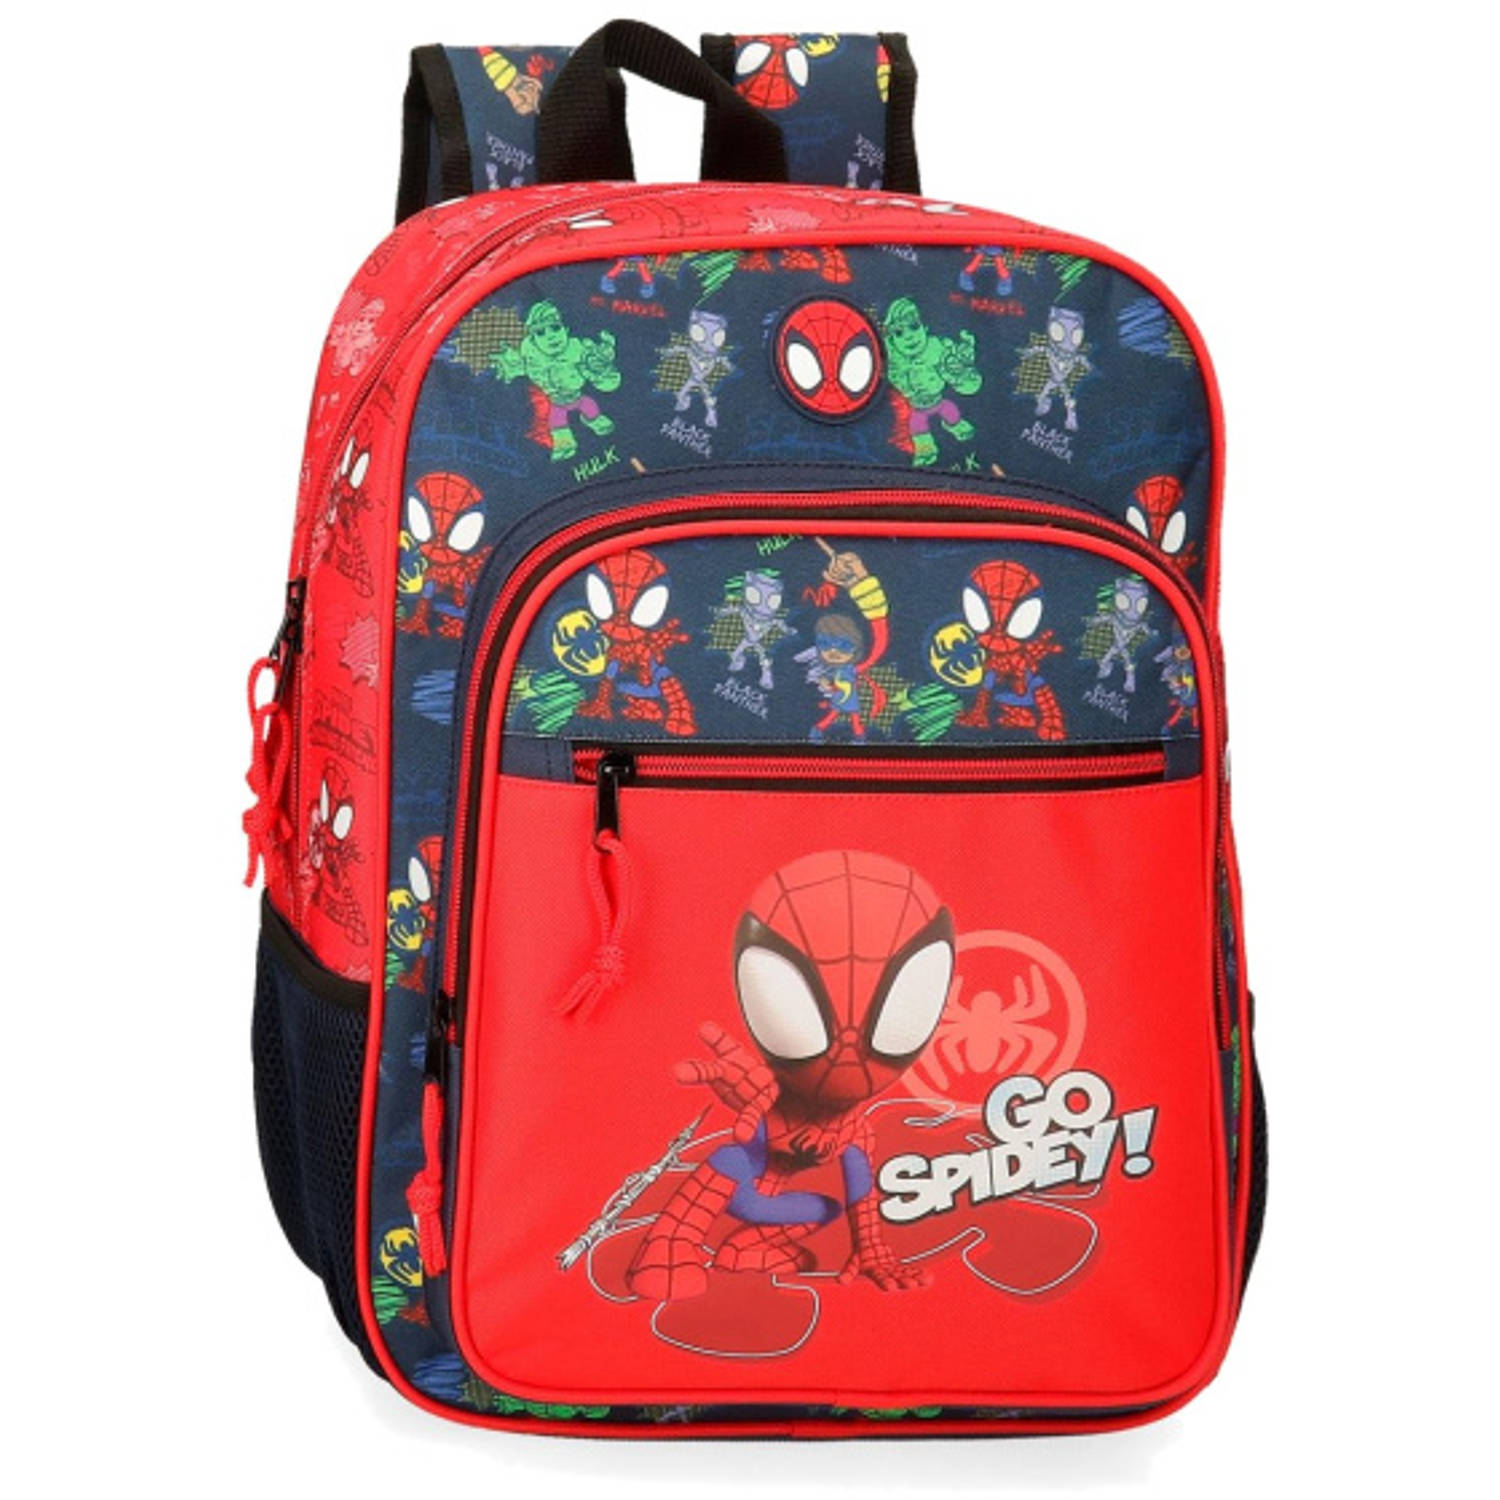 Spider-man Go rugzak junior rood